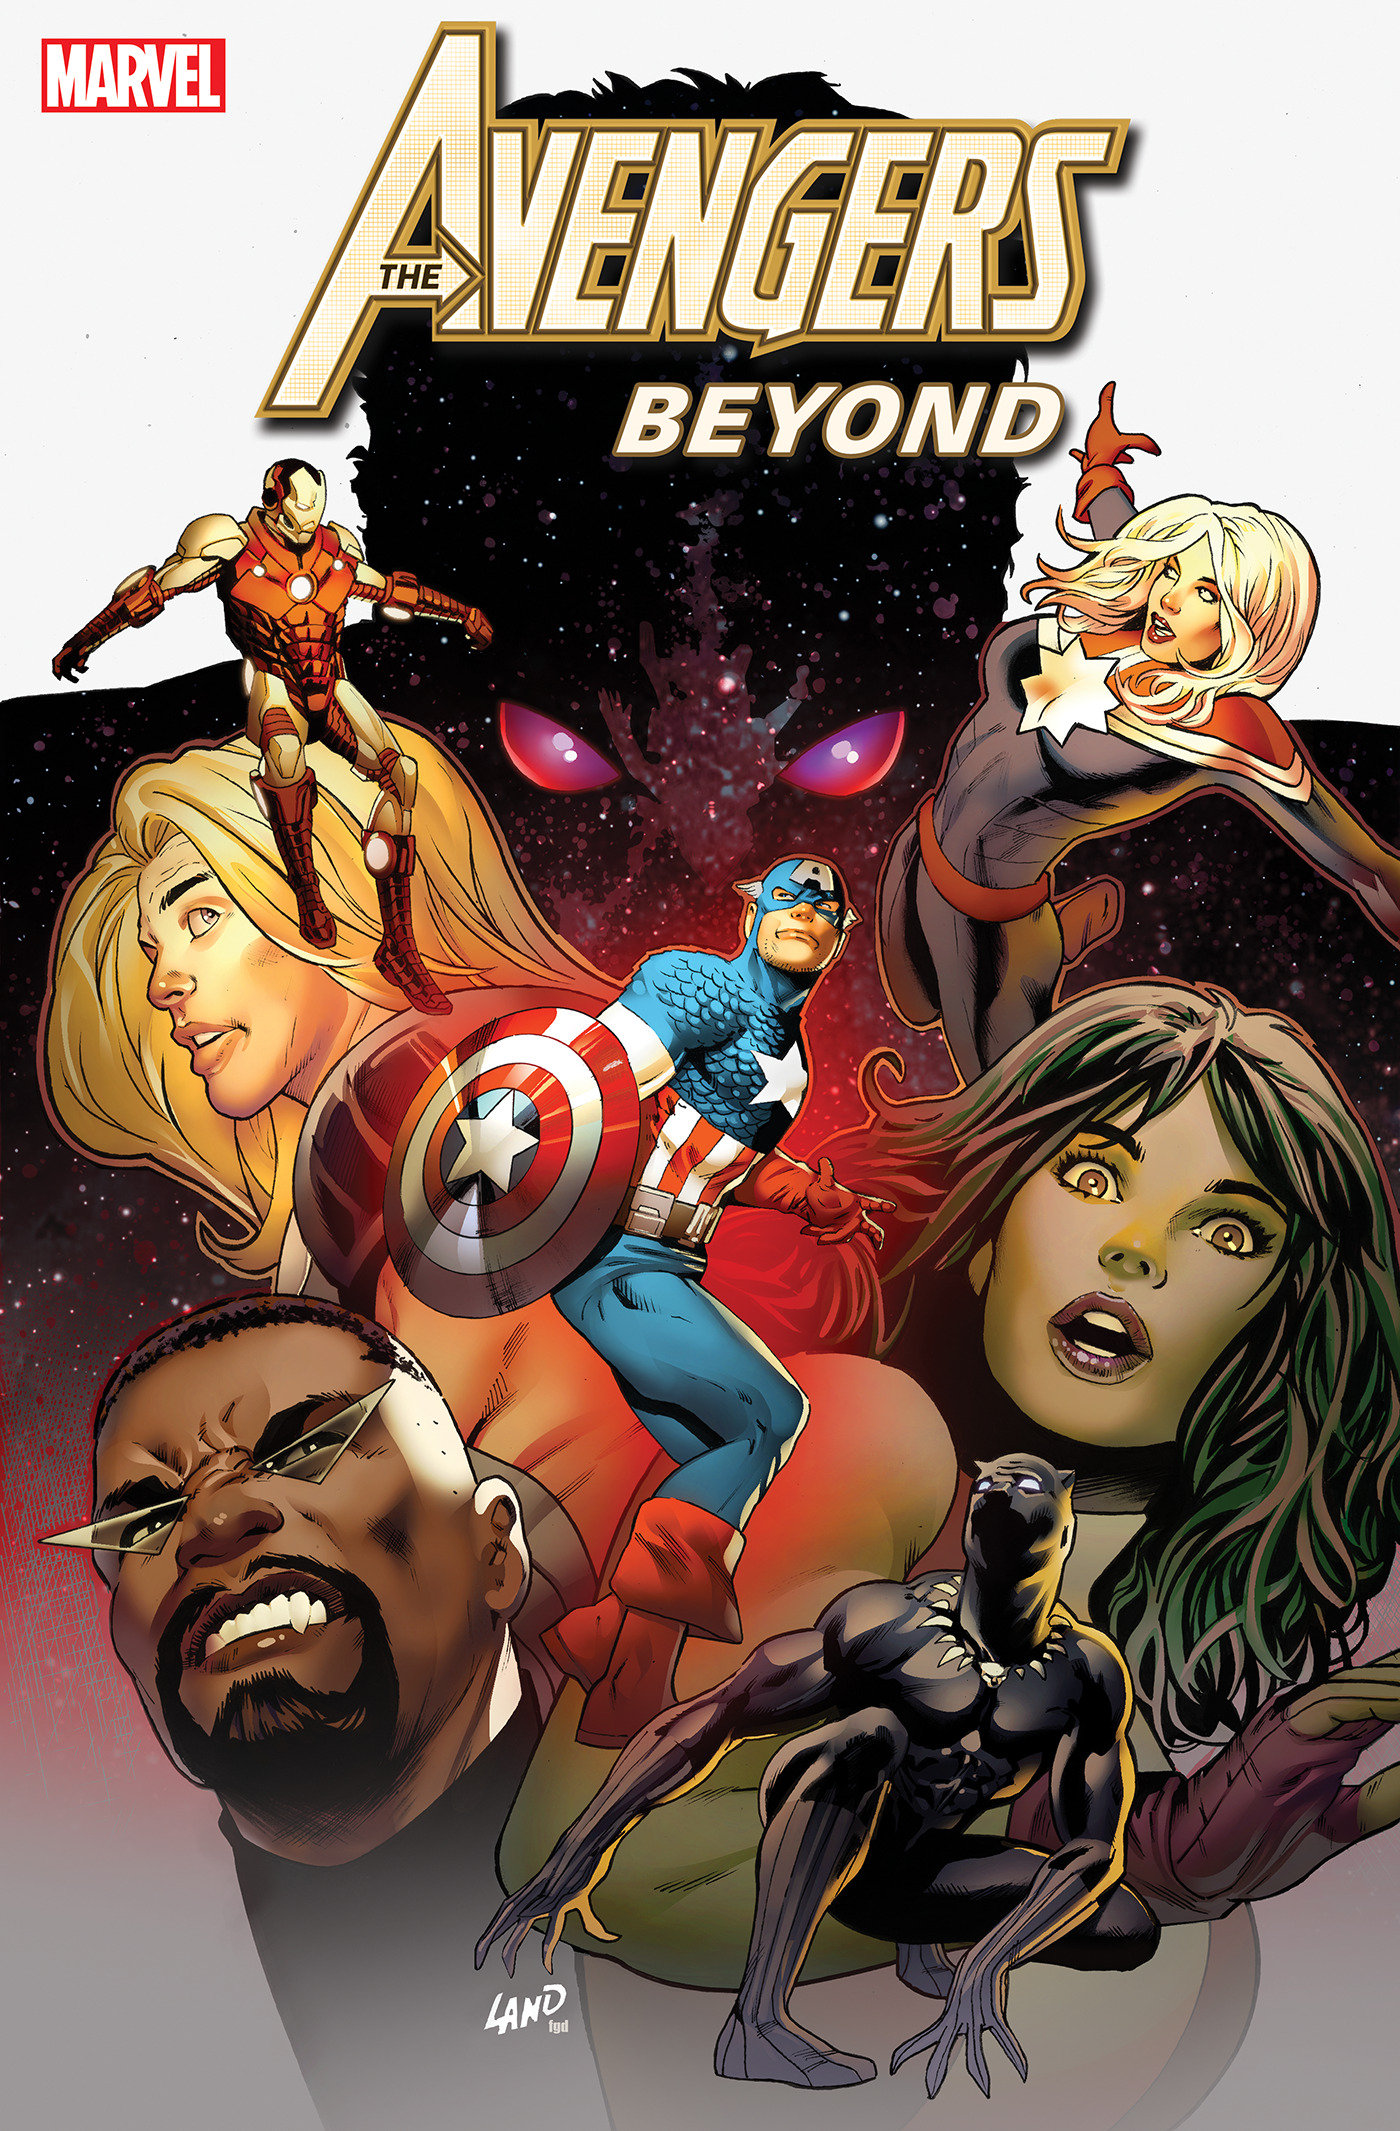 Avengers: Beyond #1 Land Variant (Of 5)